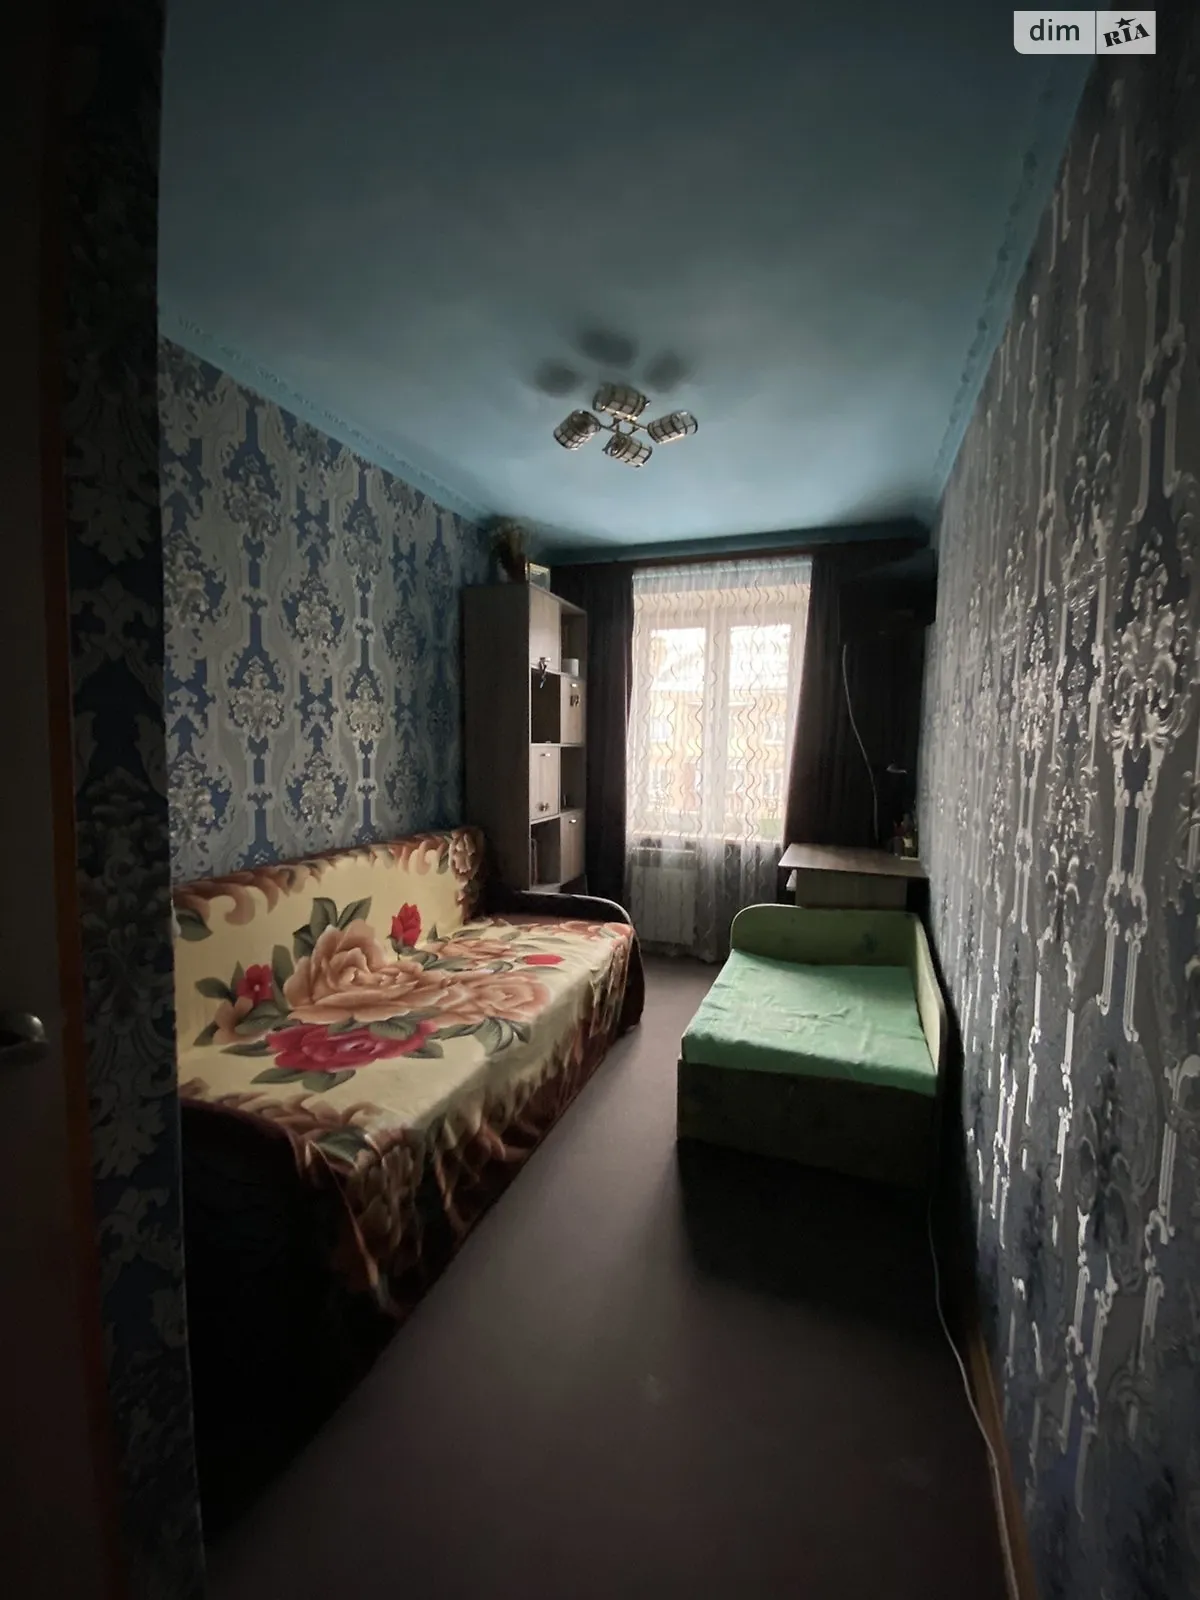 Продается комната 86 кв. м в Киеве, цена: 10000 $ - фото 1